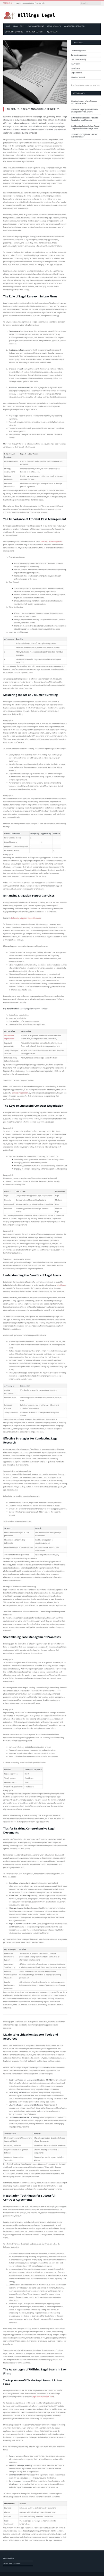 Simkovic Law Firm - Billings MT Lawyers